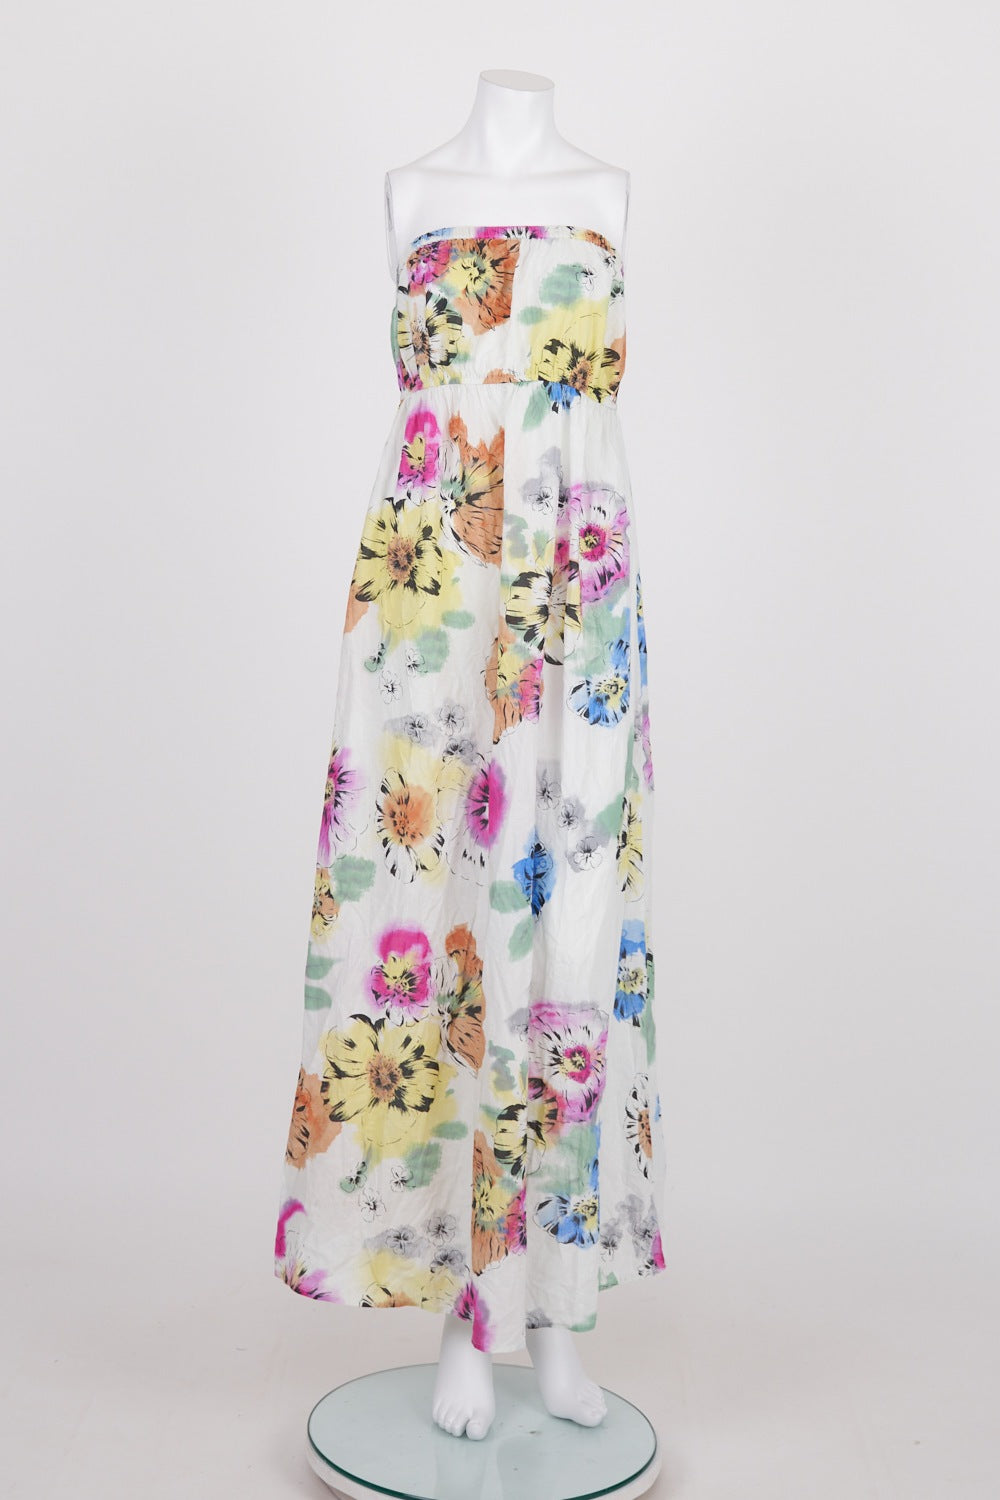 ASOS Strapless White Floral Maternity Maxi Dress 8